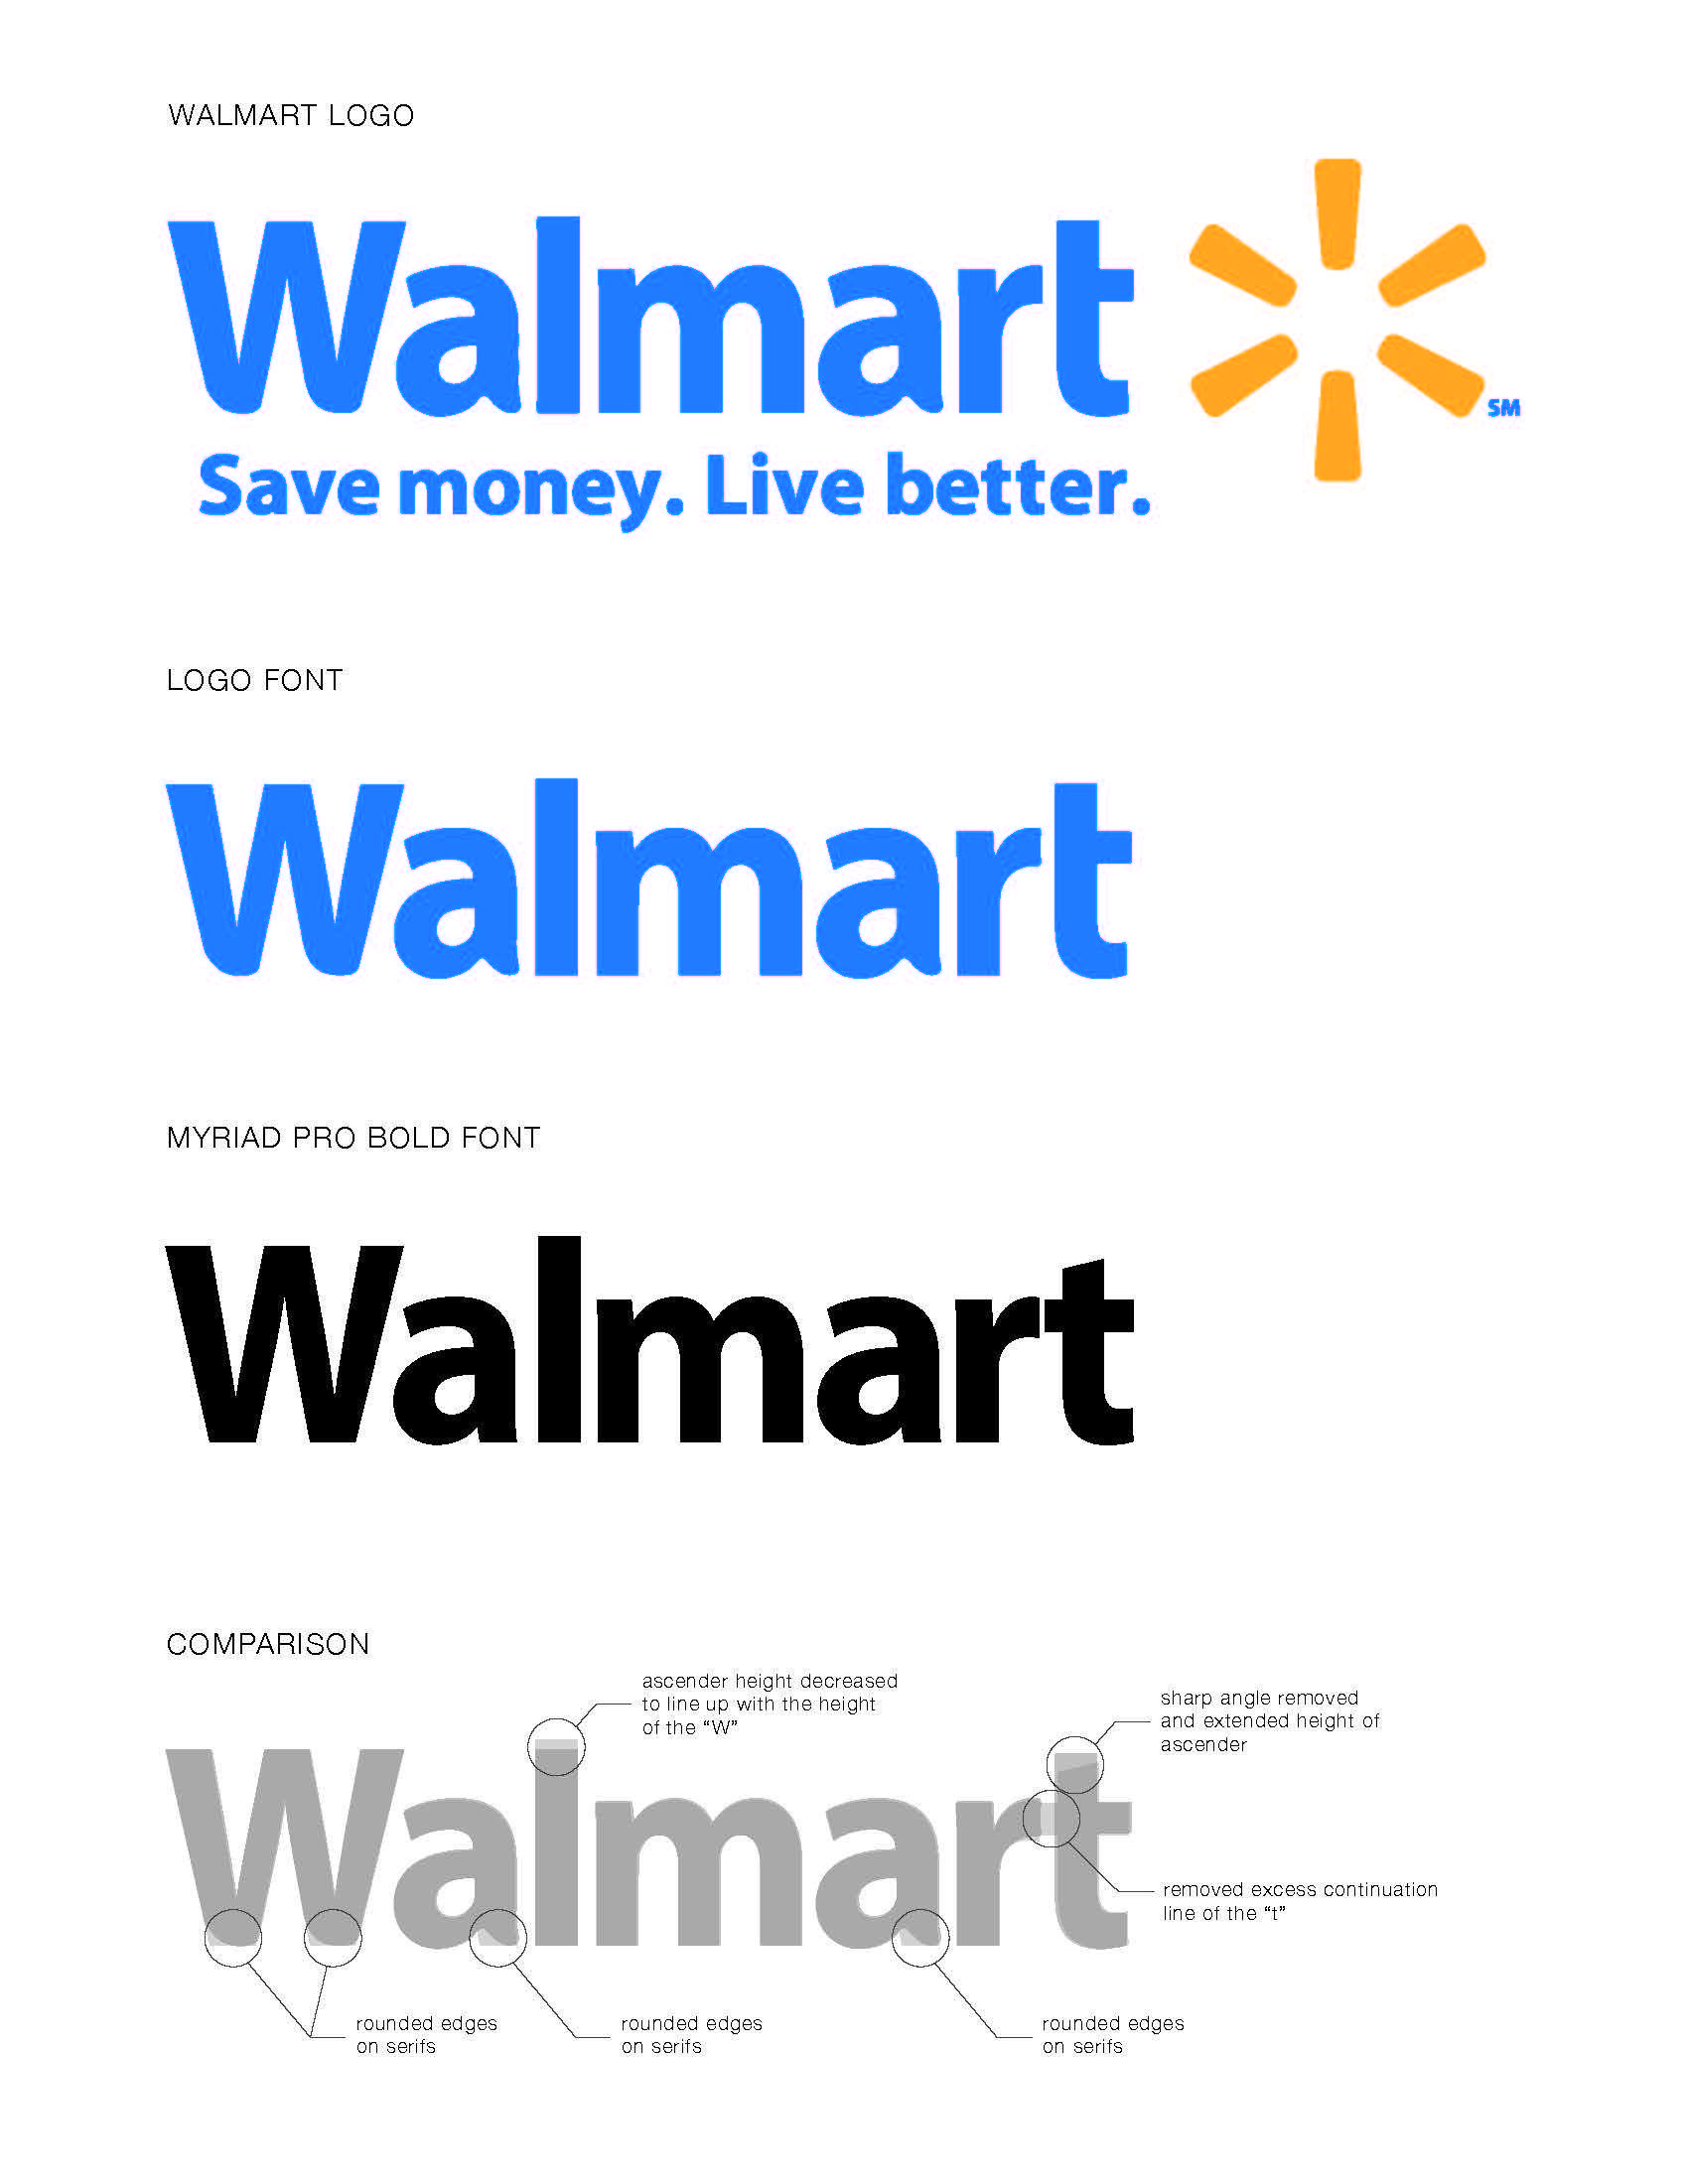 Old Walmart Logo - WAL+MART, Foundation donates $1 Million to Hurrican Harvey Victims ...